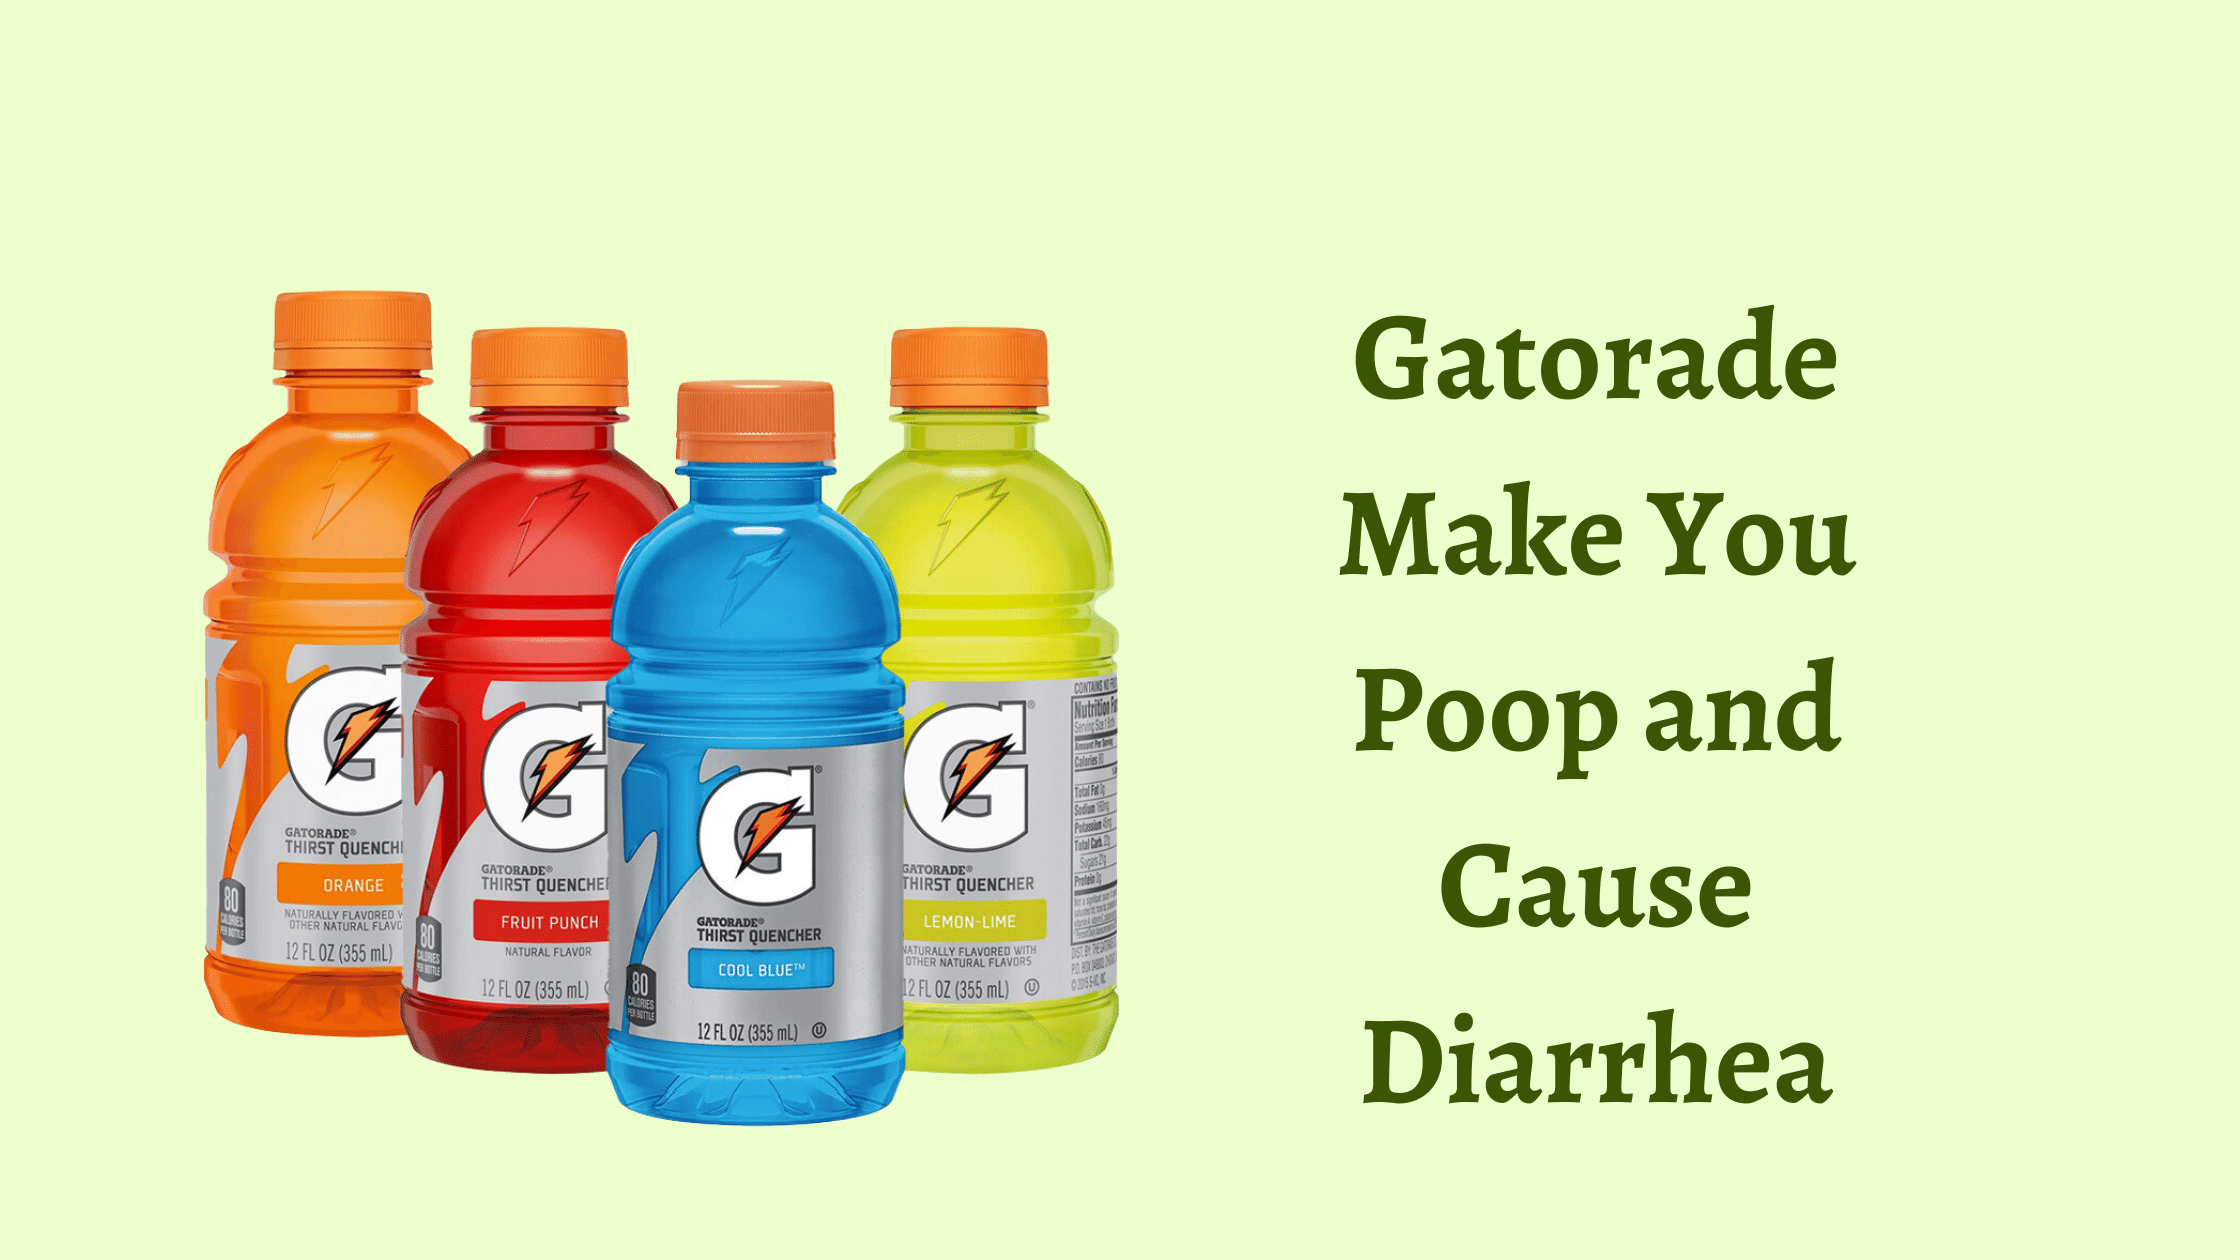 Does Gatorade Make You Poop and Cause Diarrhea